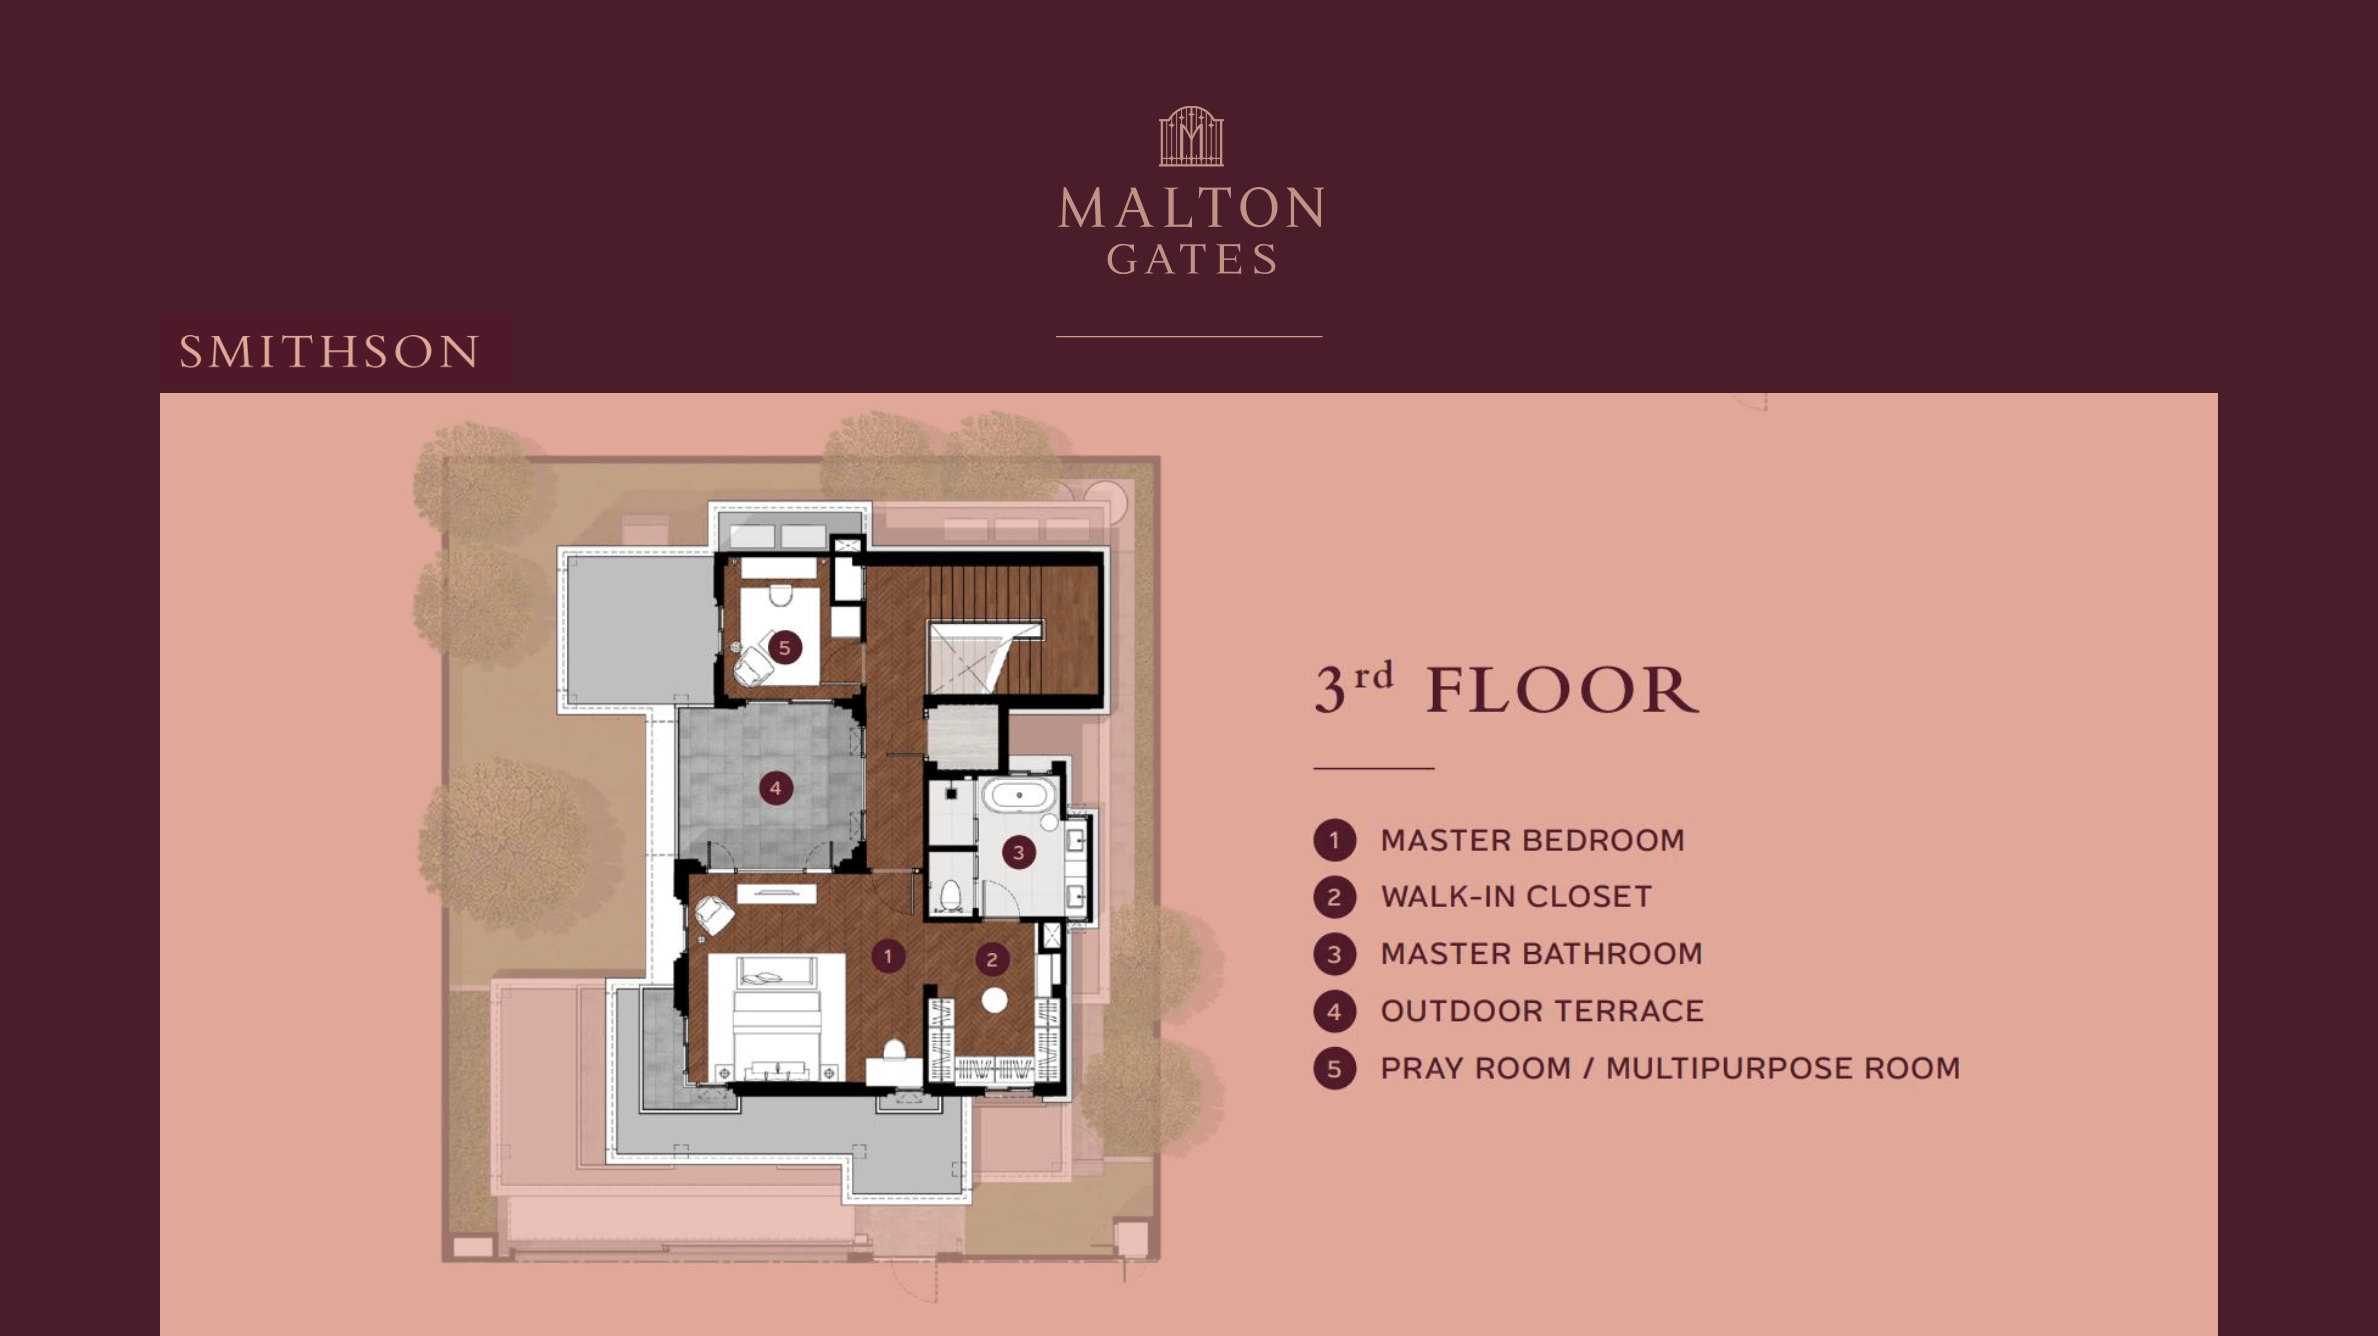 Malton Gates Smithson Floor Plan 3